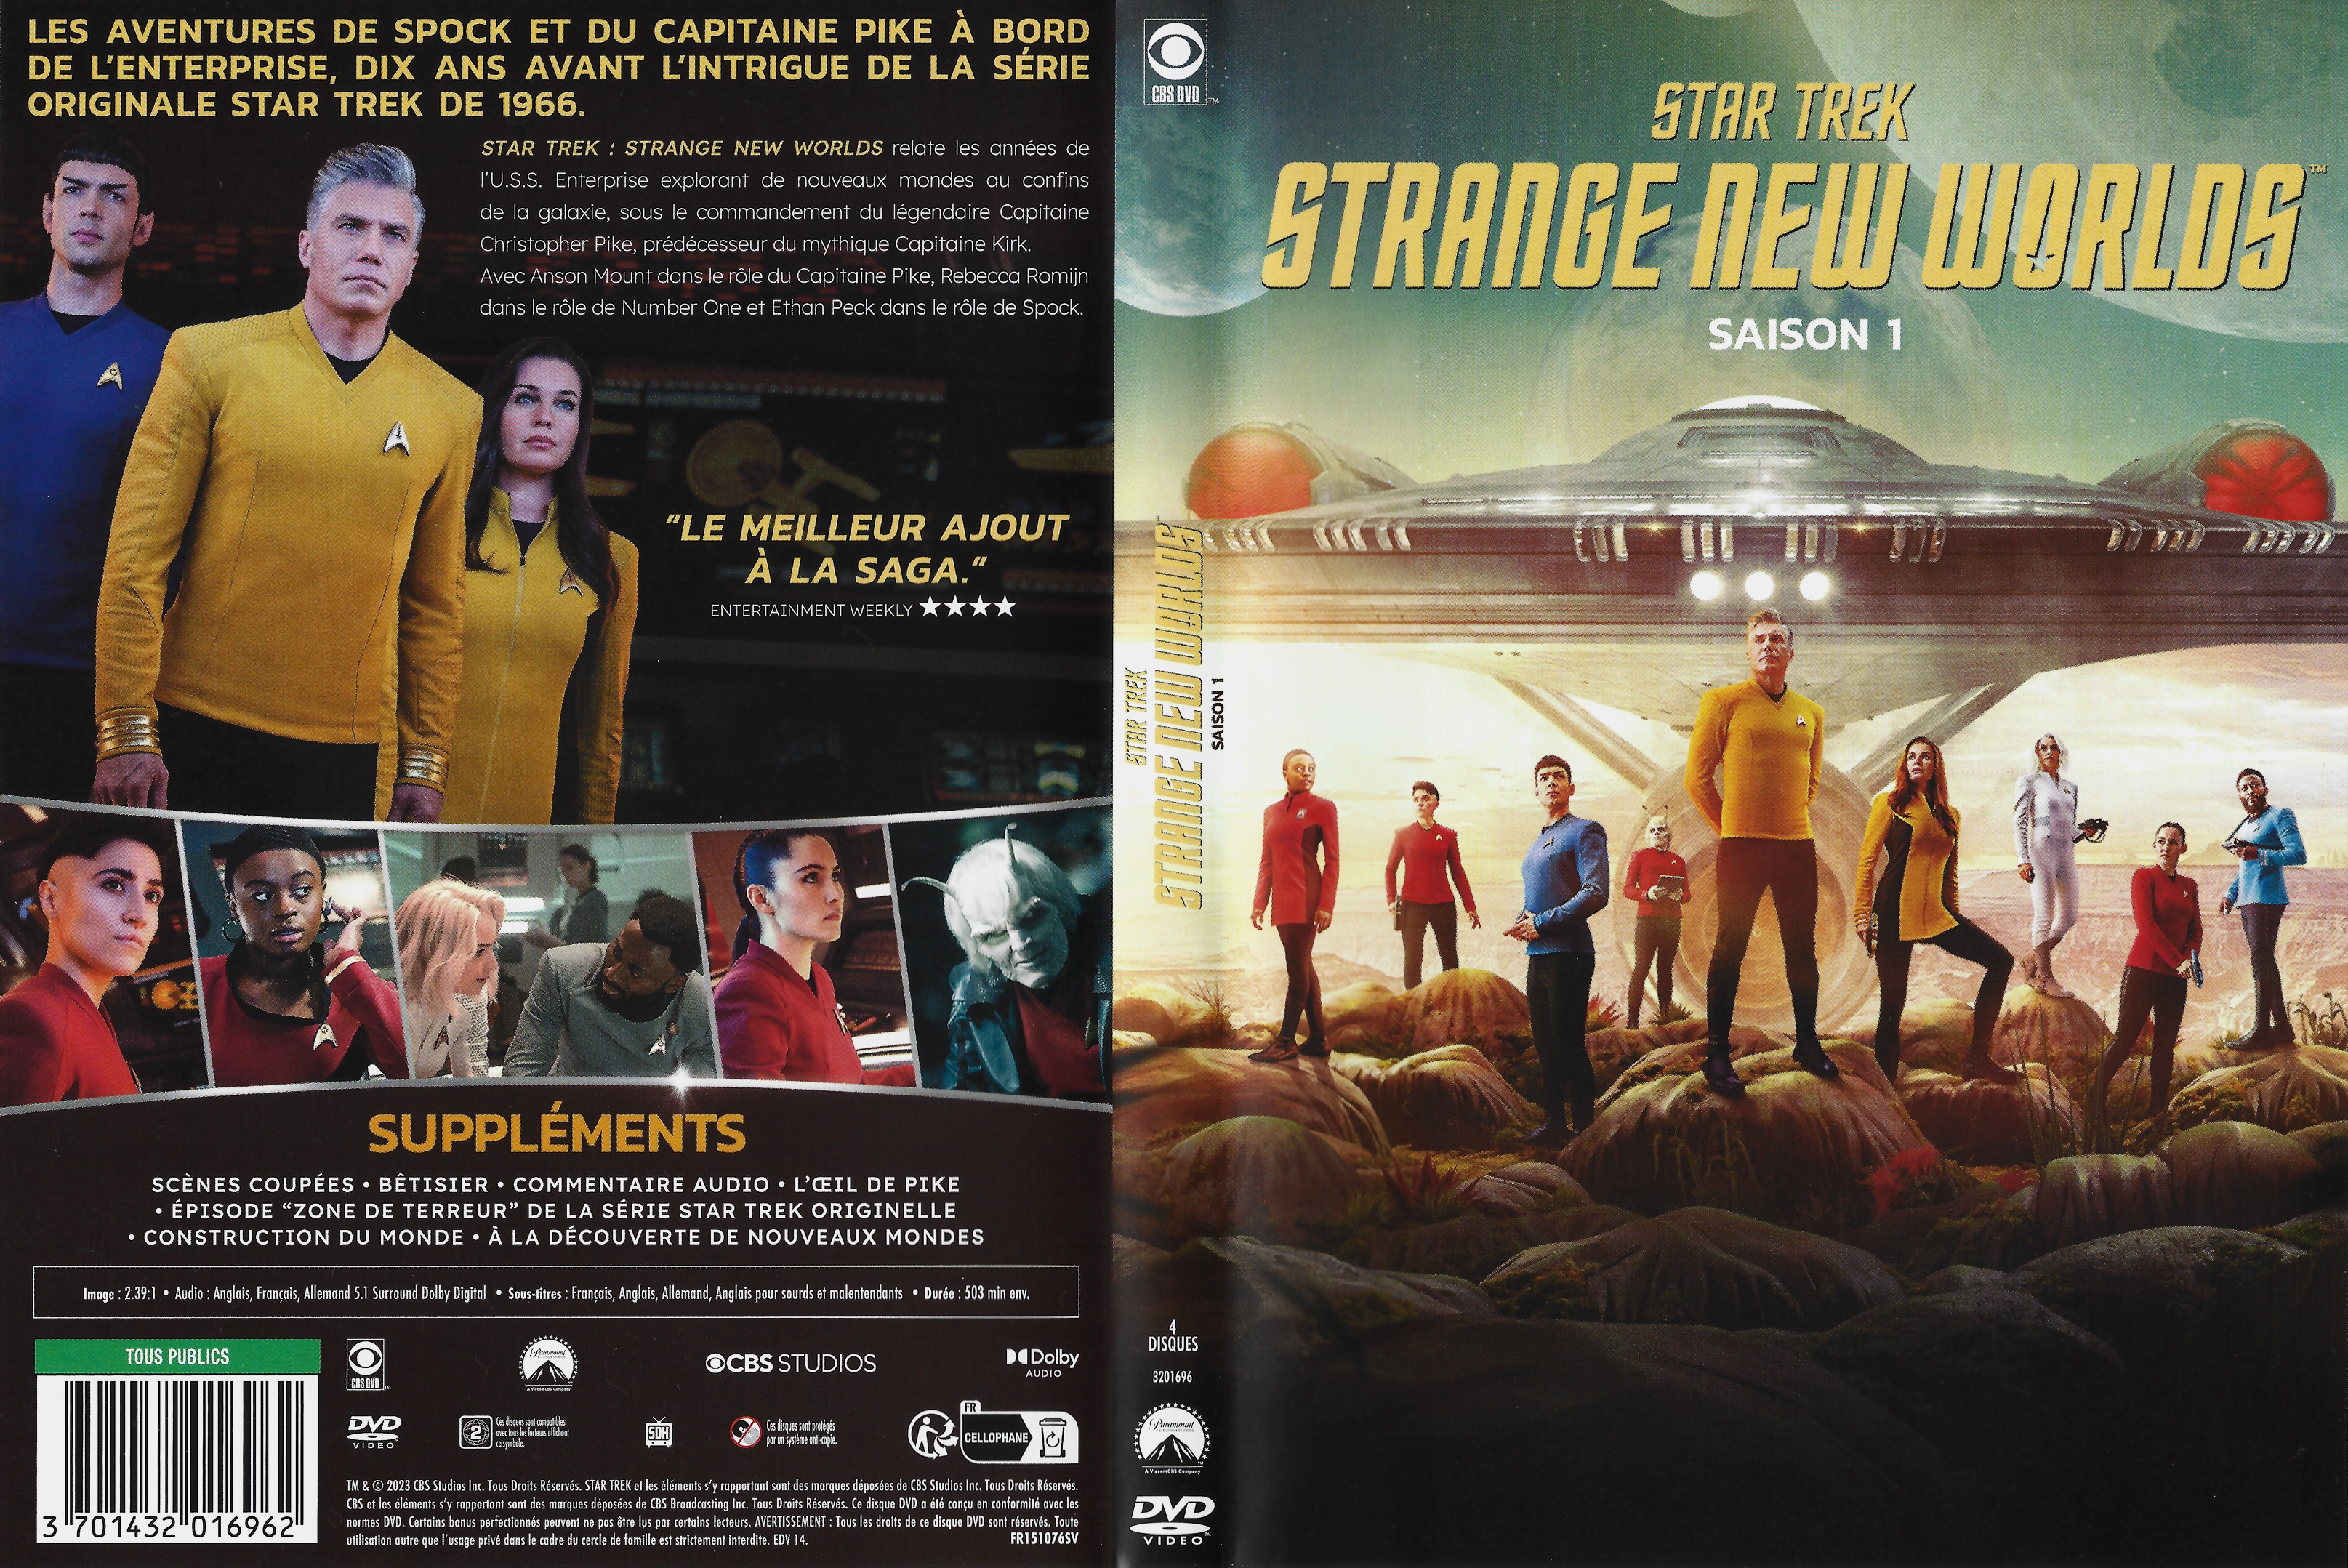 Jaquette DVD Star Trek Strange New Worlds saison 1